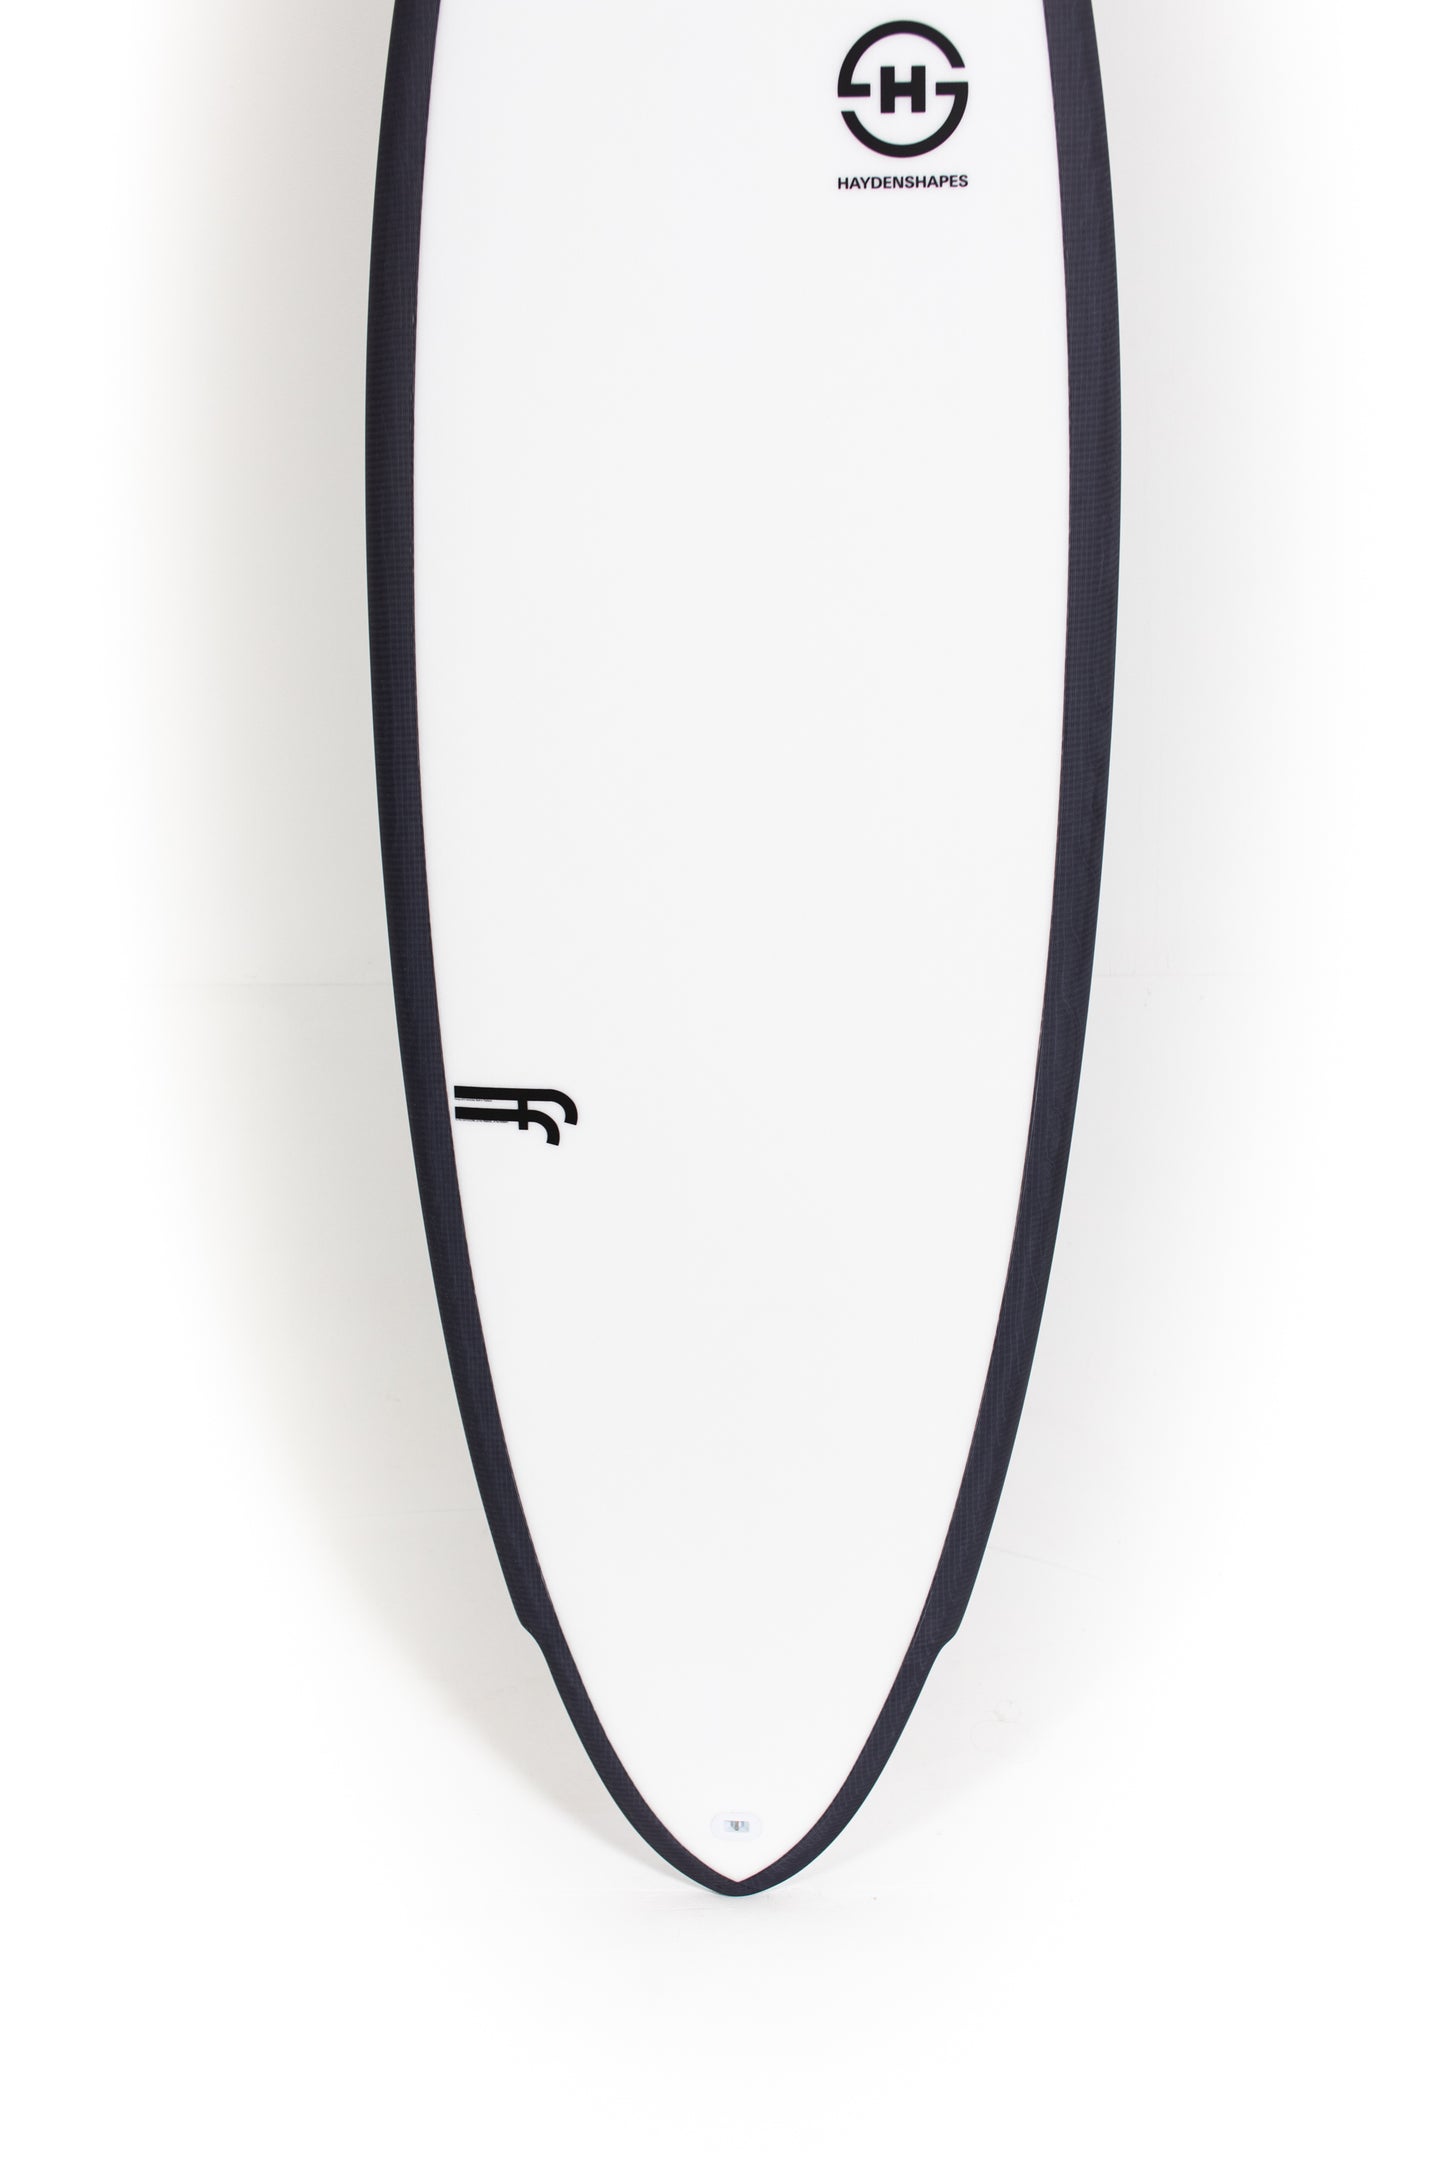 
                  
                    Pukas Surf Shop - Haydenshapes Surfboard - HYPTO KRYPTO TWIN PIN - 6'0" X 20 7/16" X 2 5/8" - 35.42L
                  
                